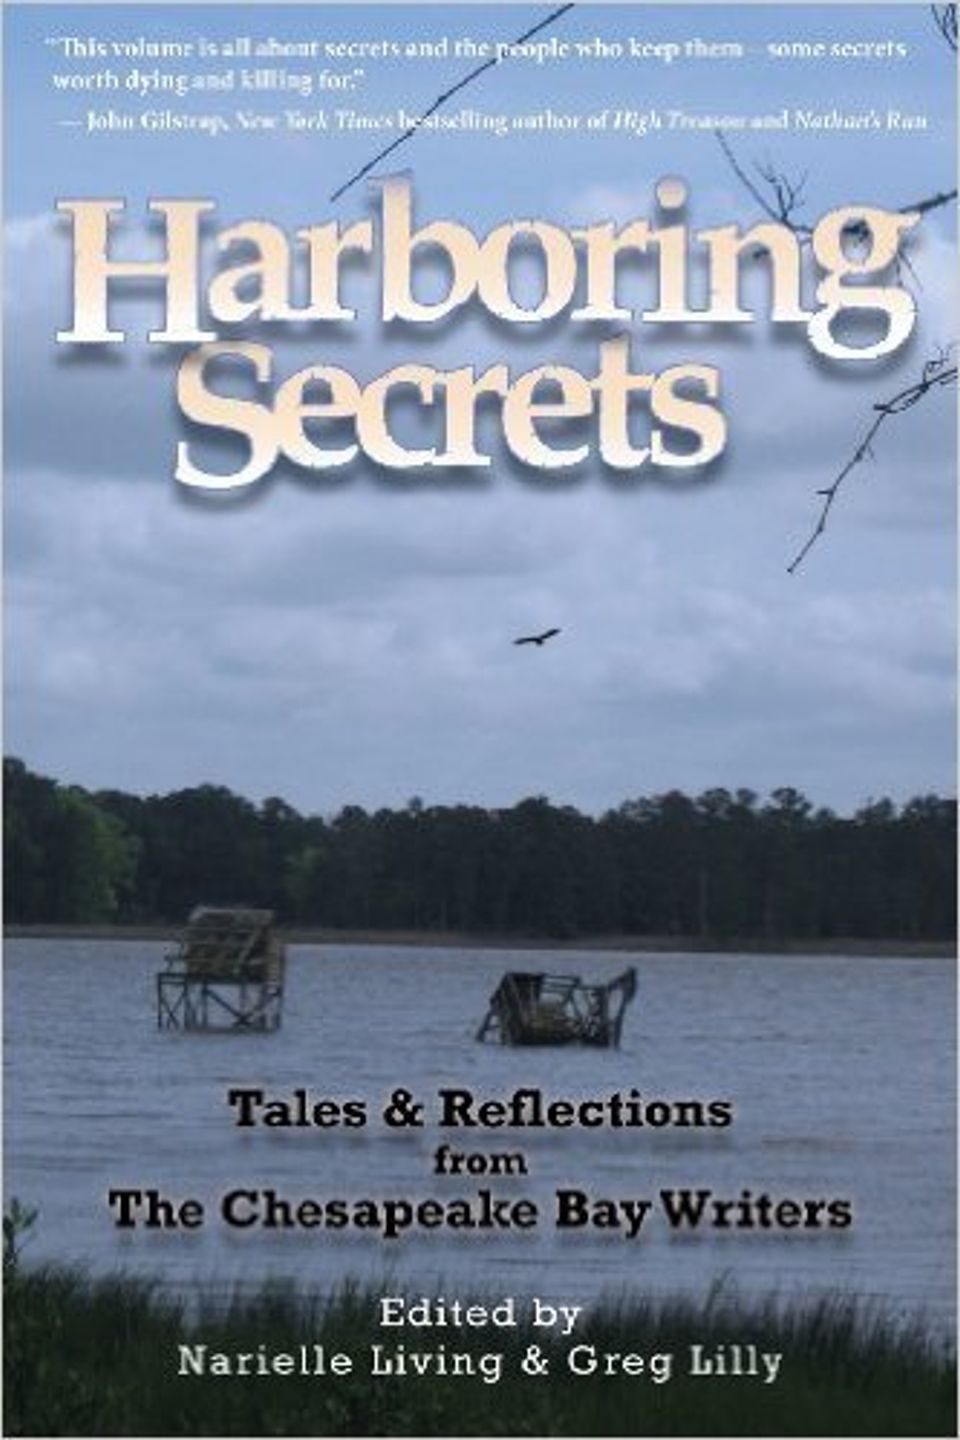 Harboring secrets 20160512 3781 kbiab2